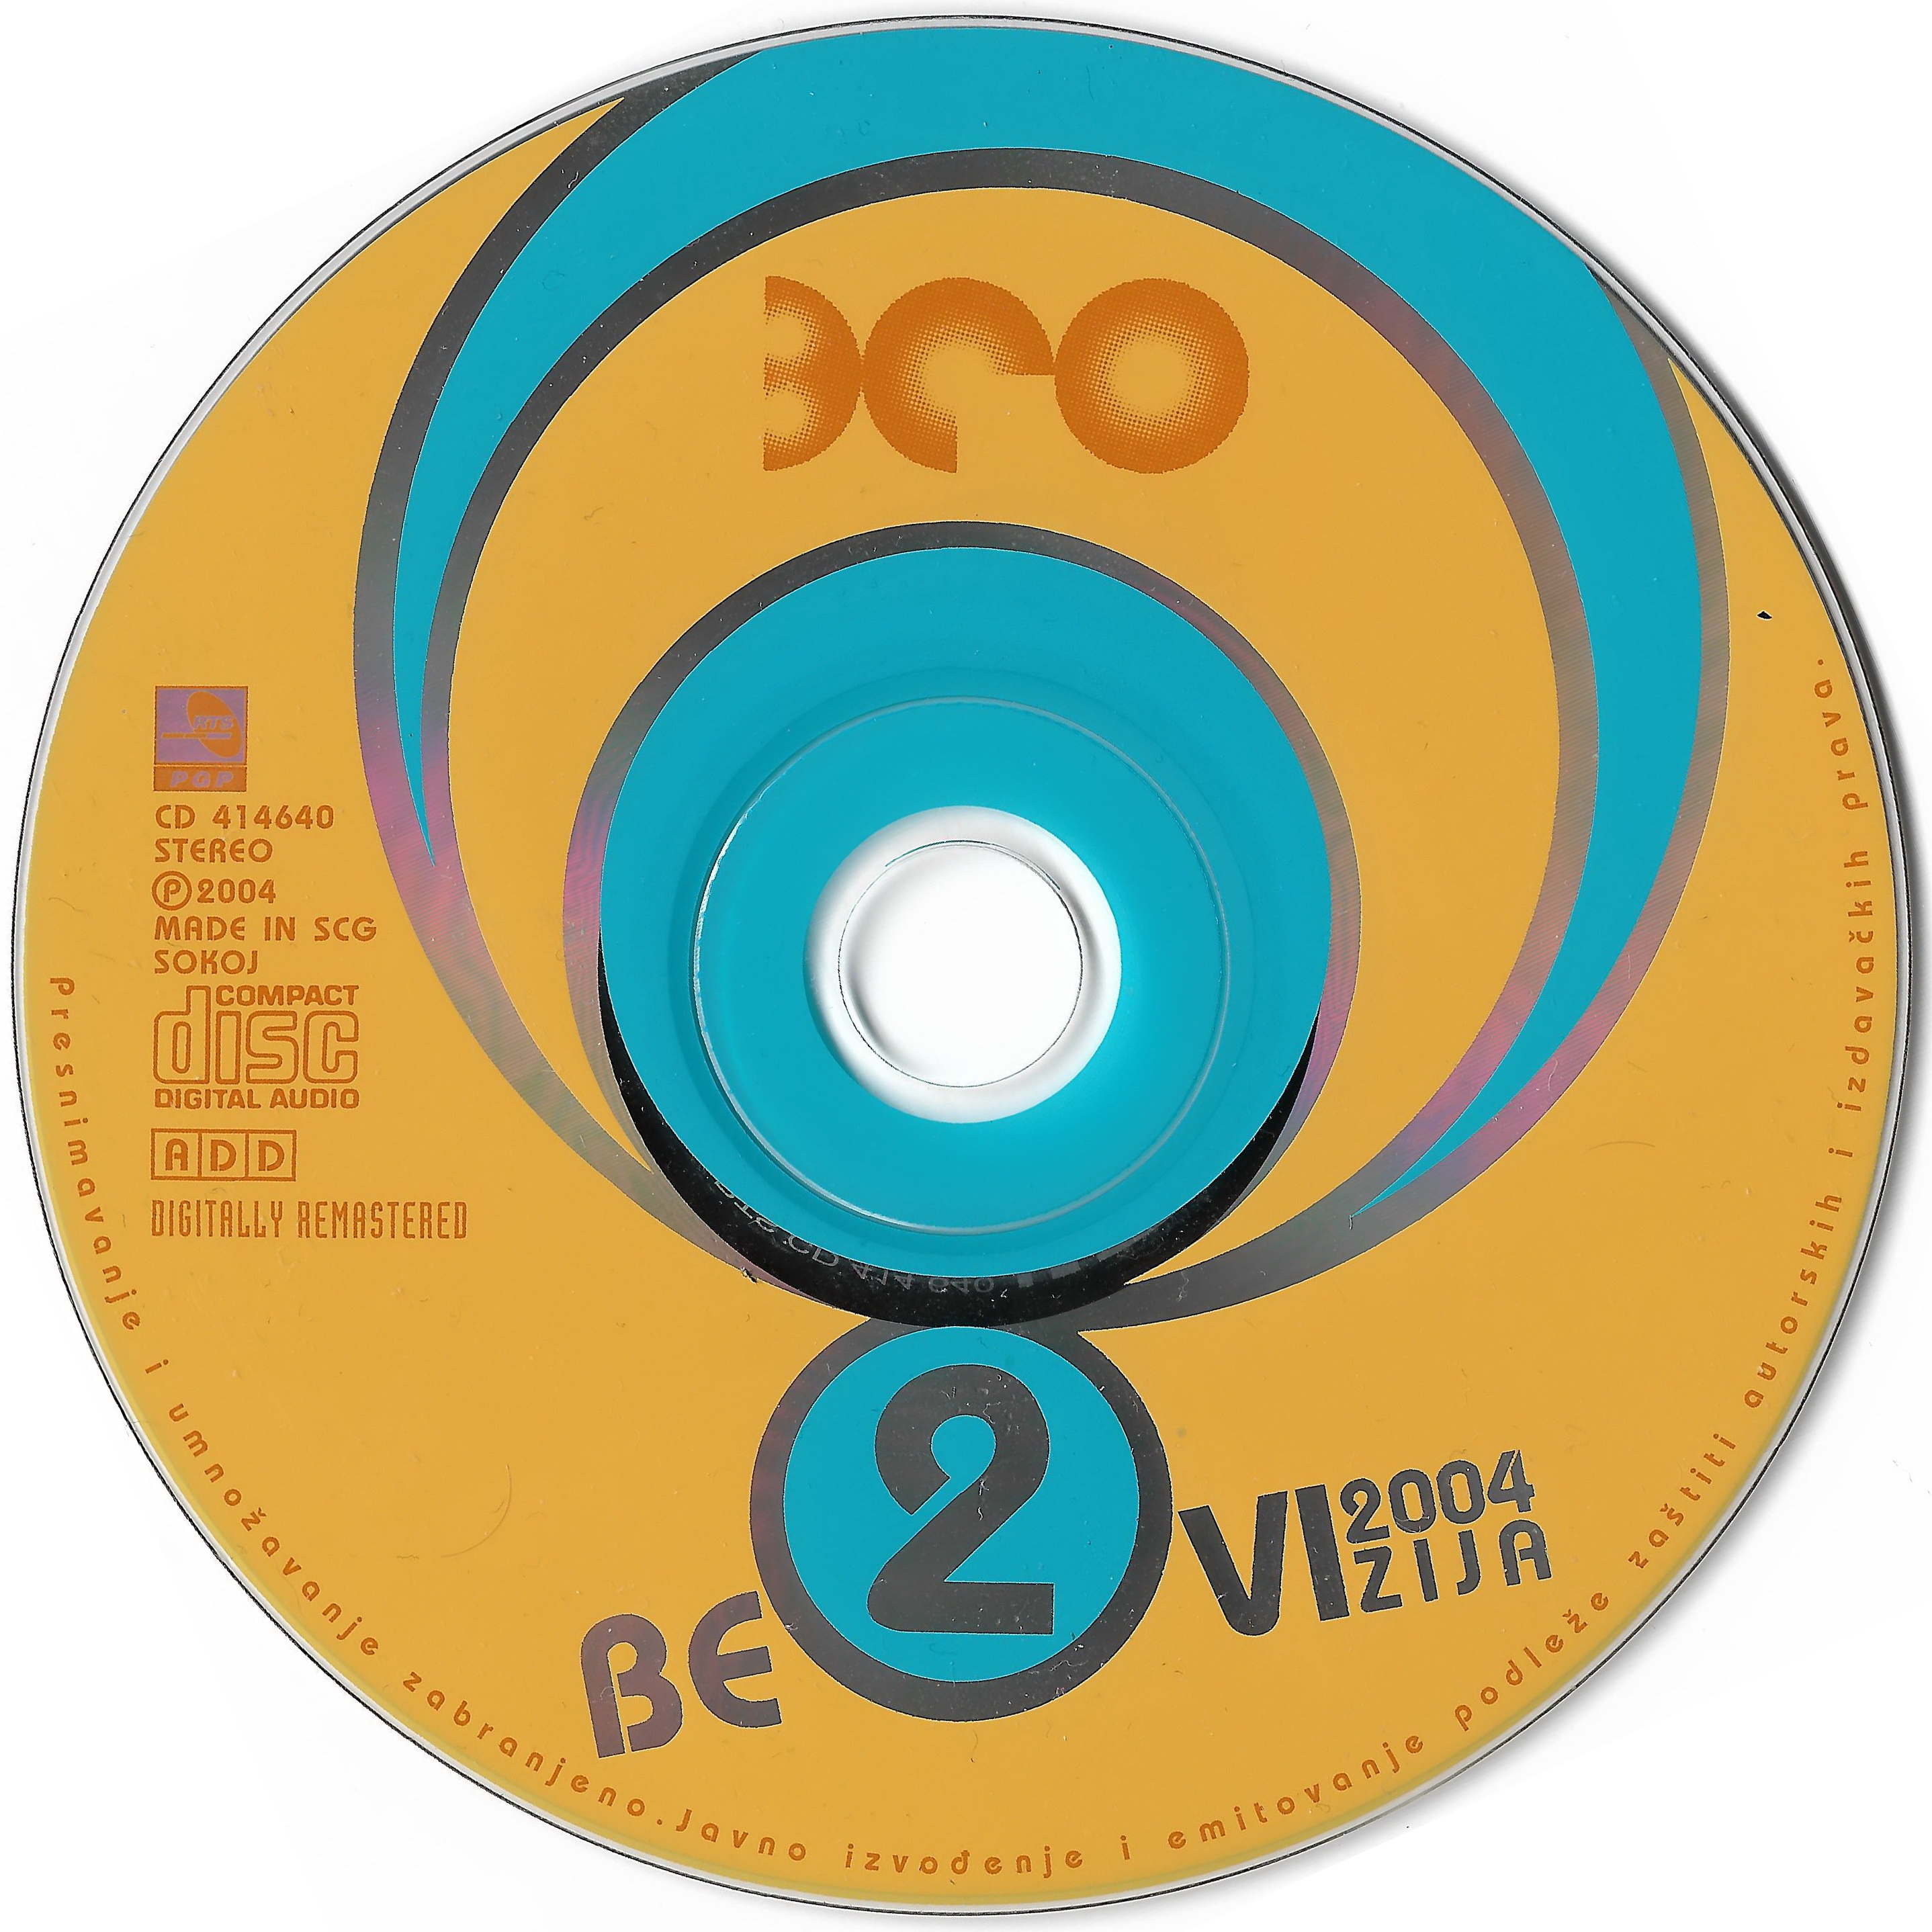 Beovizija 2004 CD 2